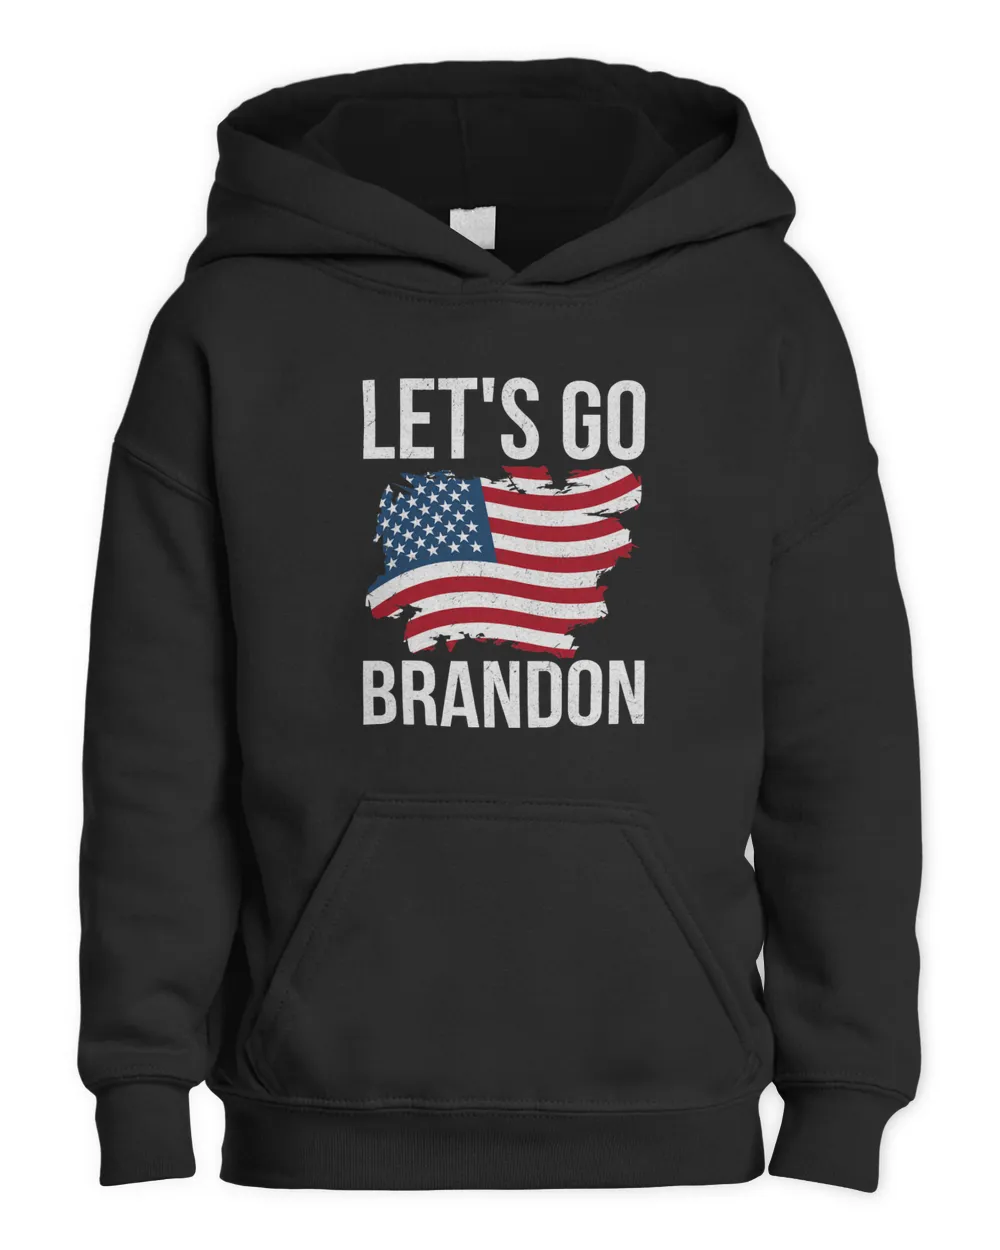 Lets Go Brandon Conservative Anti Liberal american flag